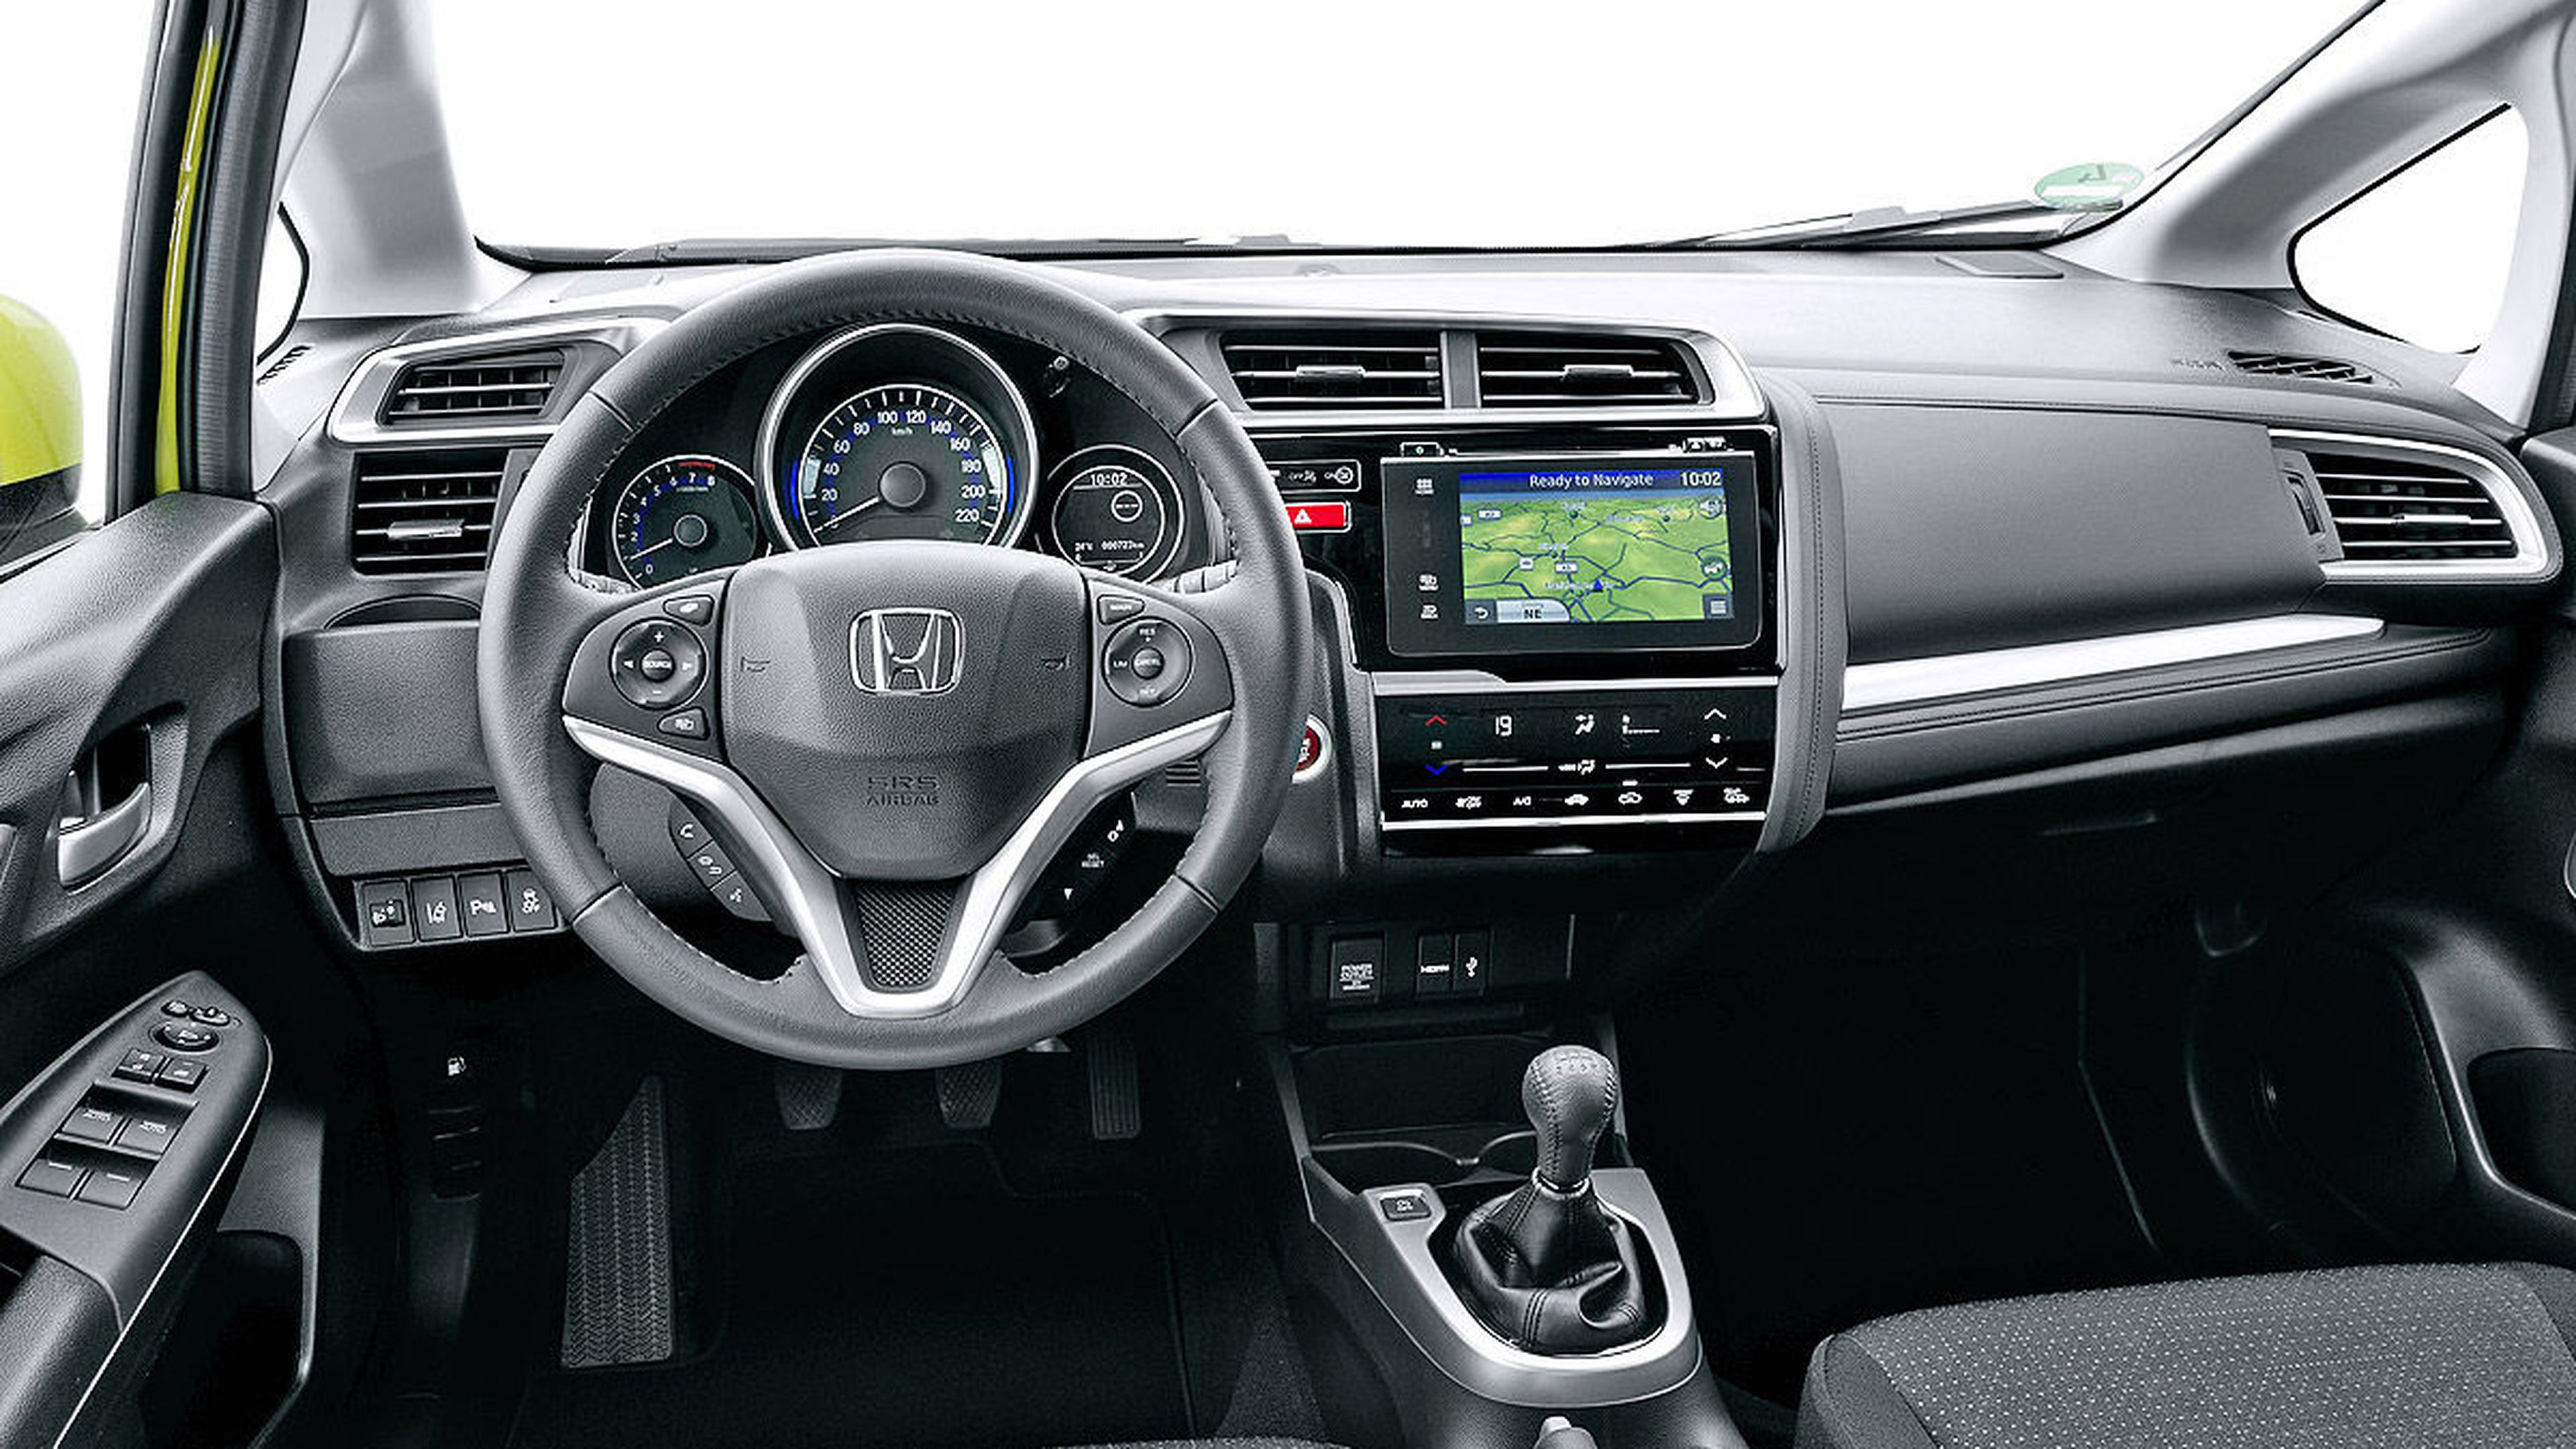 Honda dice 'adiós' a los airbag de Takata